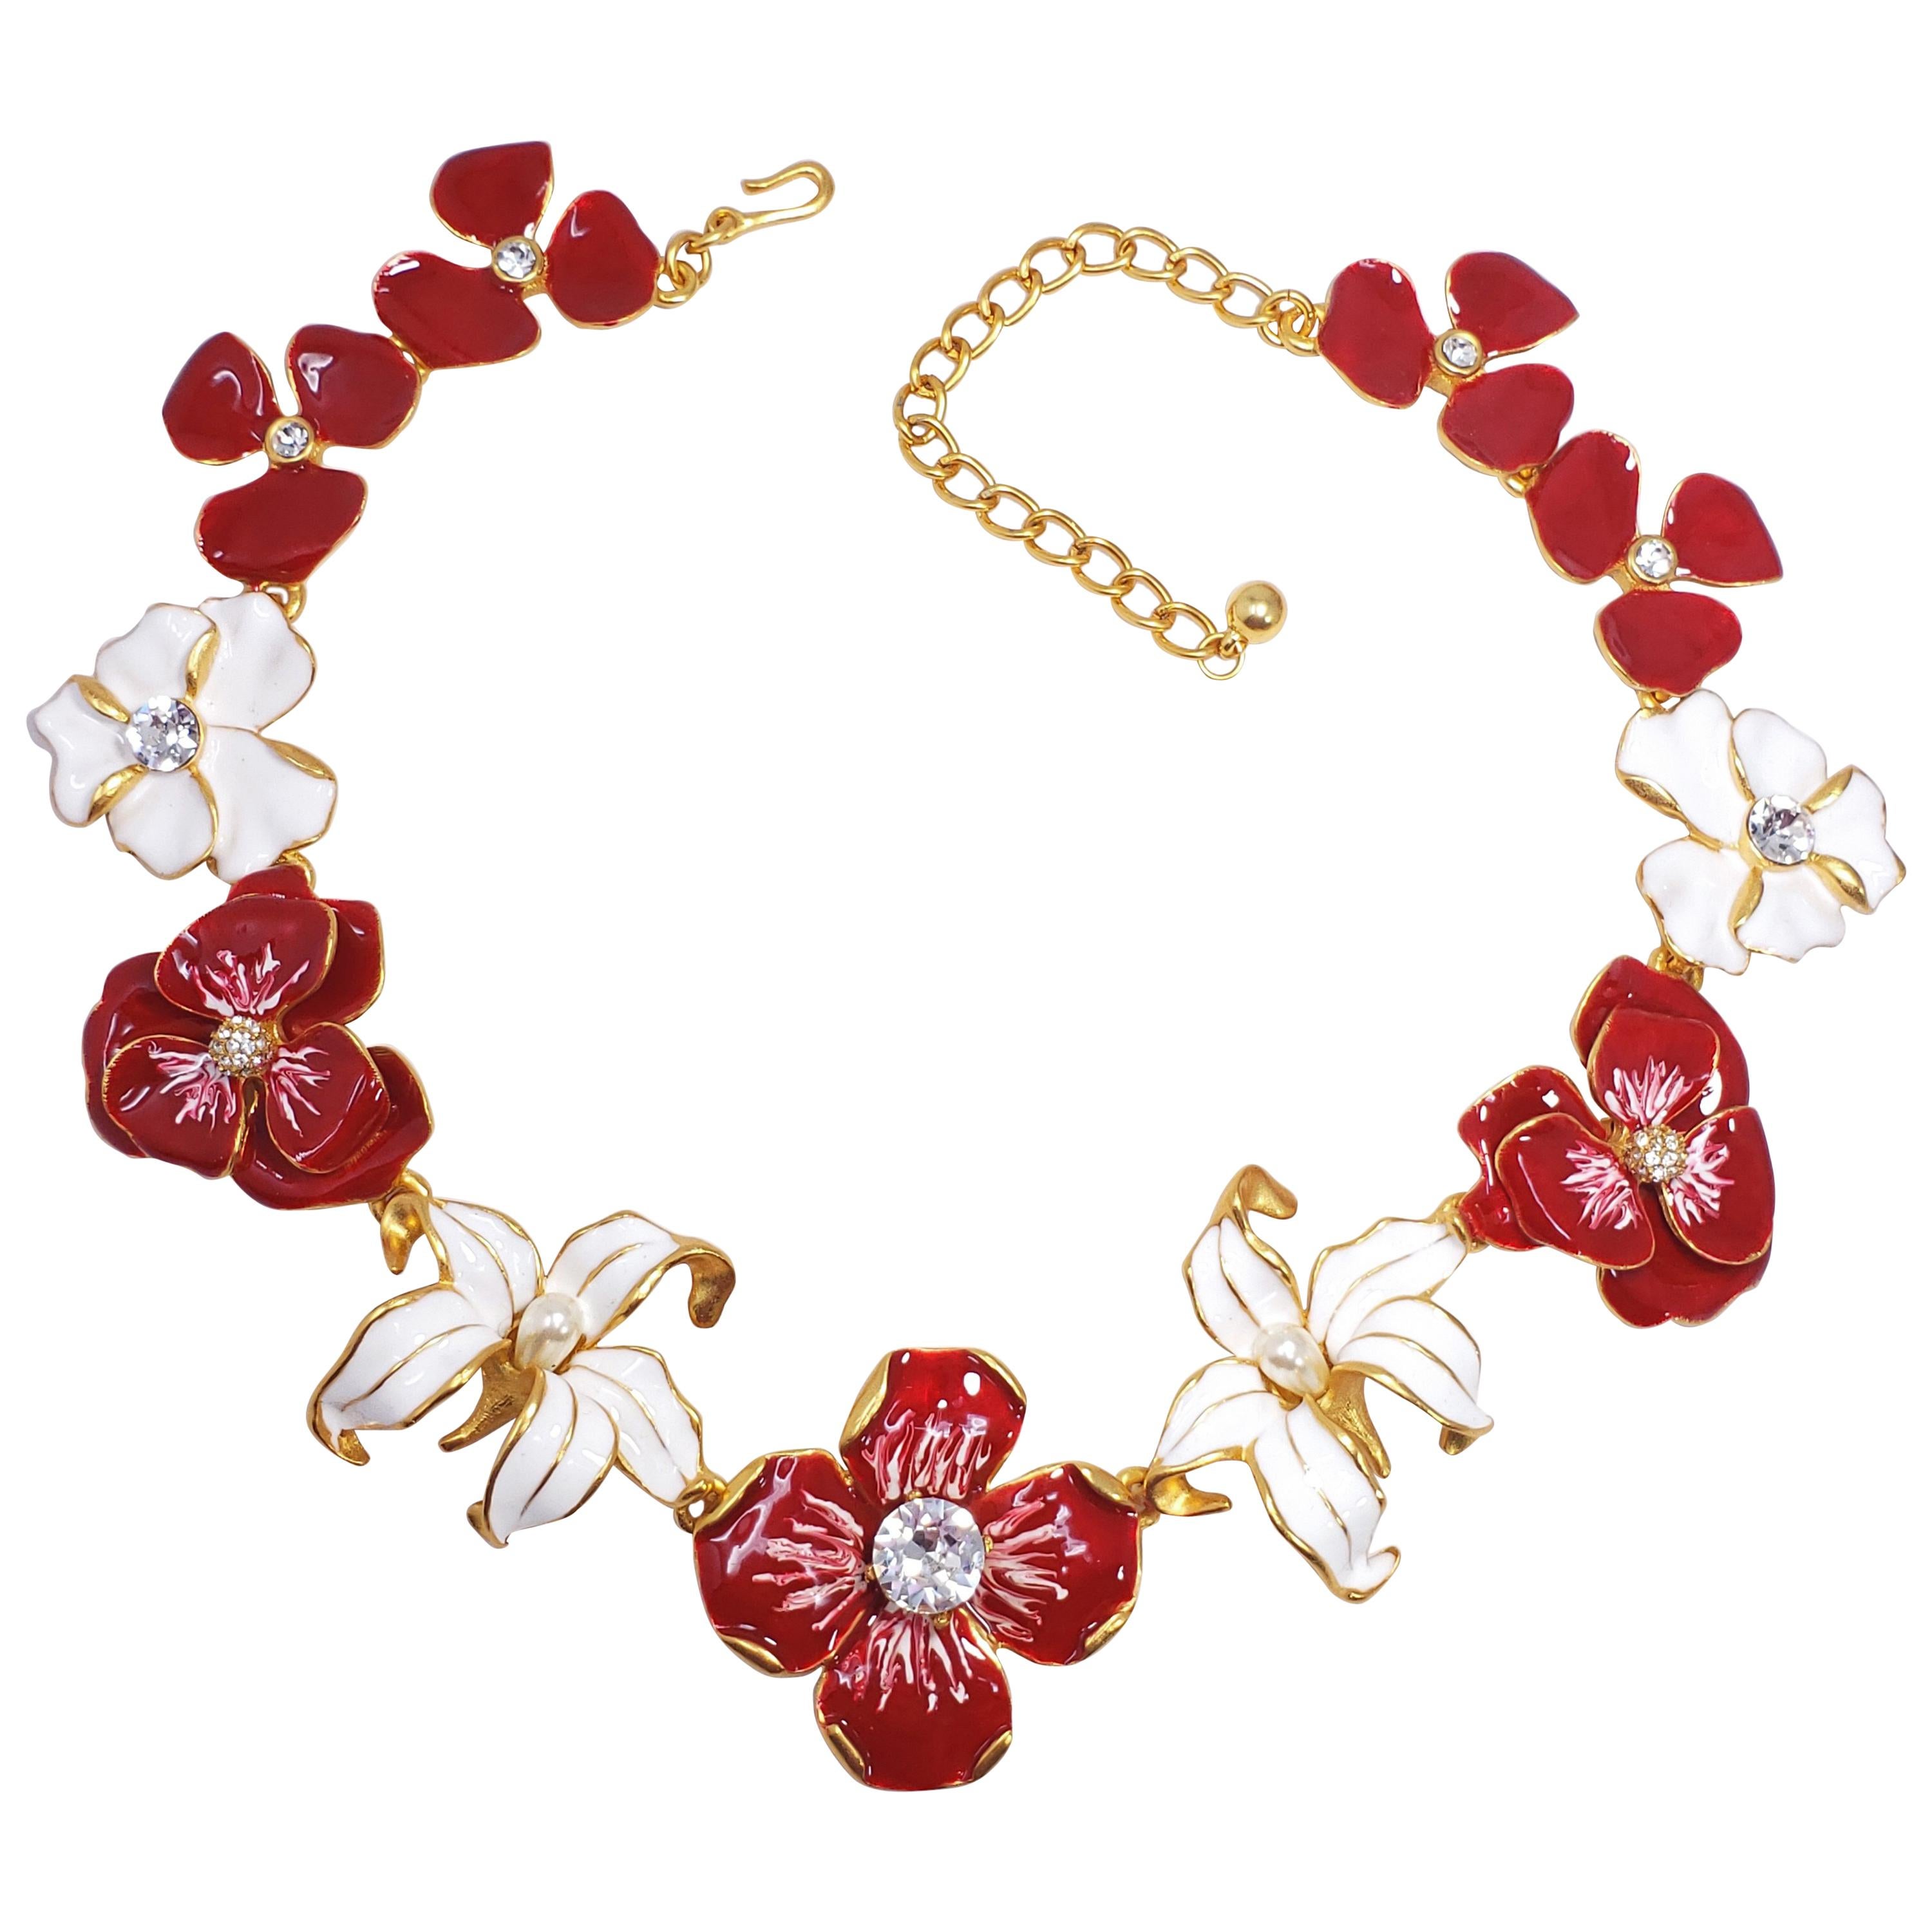 KJL Kenneth Jay Lane Flower Necklace Red White Enamel Faux Pearl & Crystals